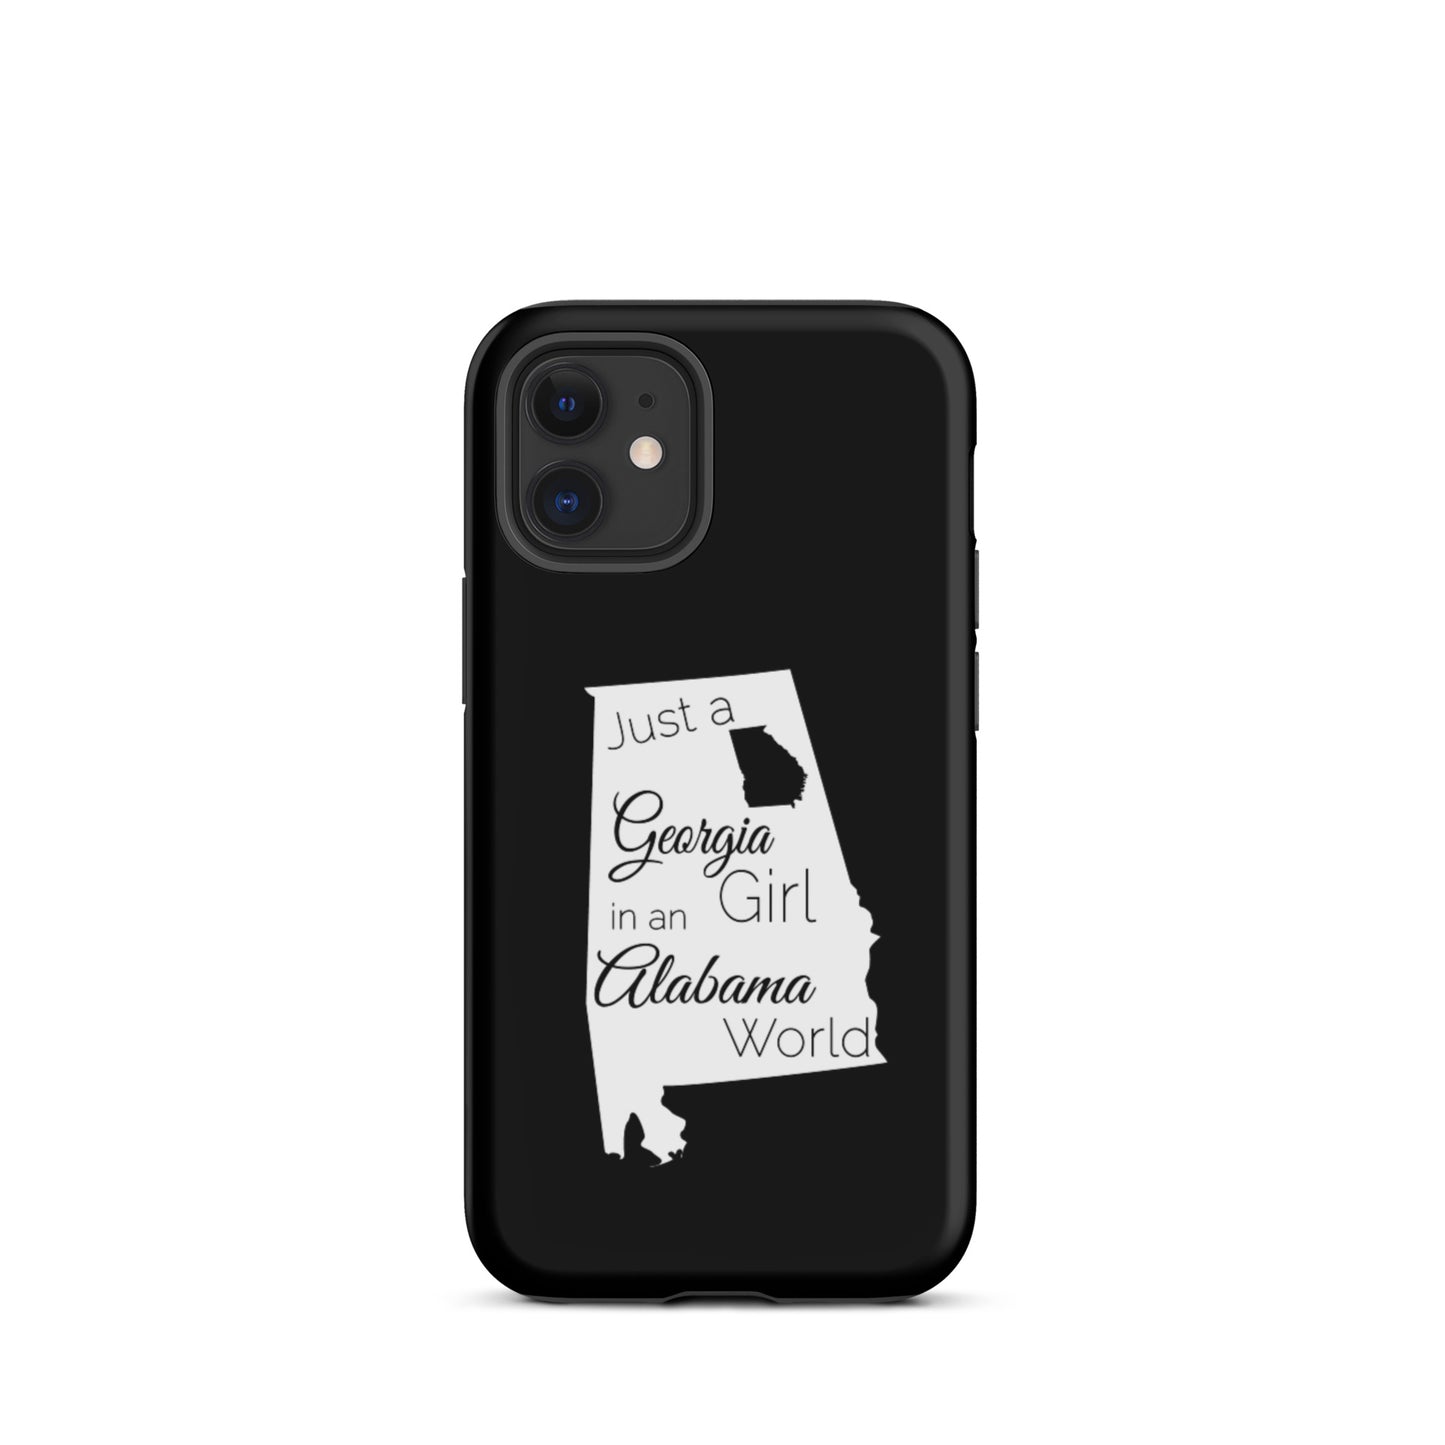 Just a Georgia Girl in an Alabama World Tough iPhone case